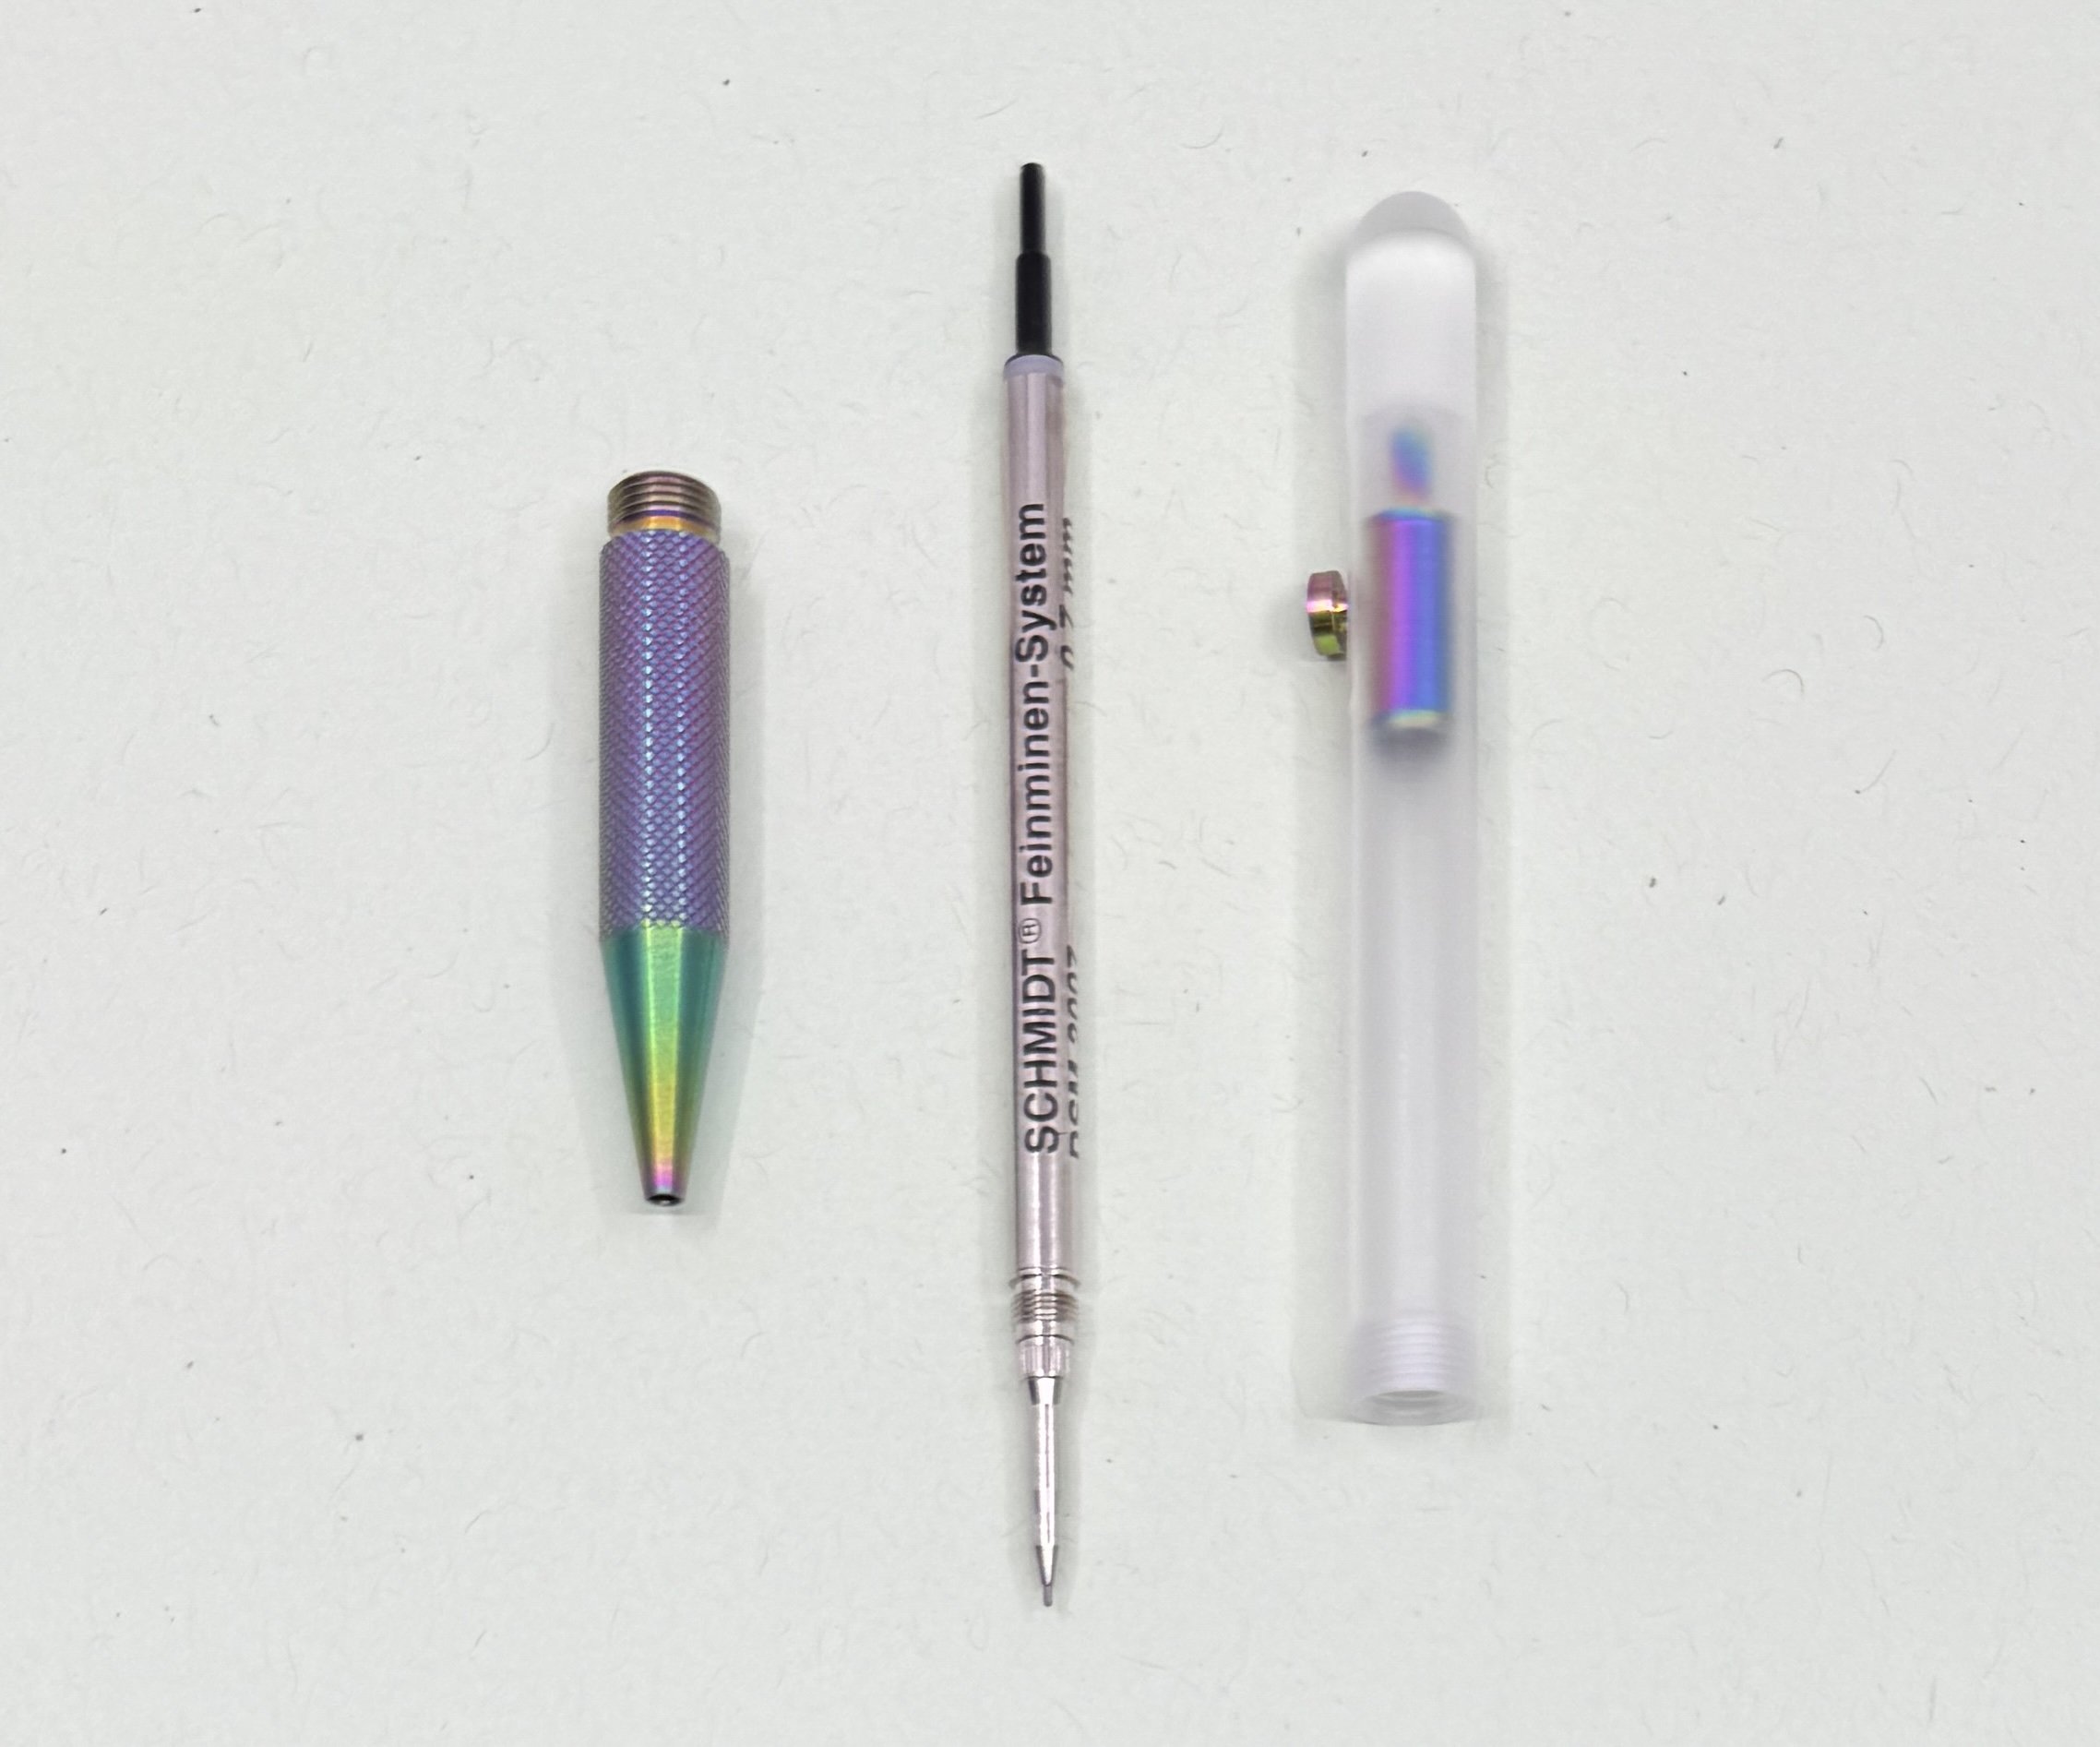 12 Pcs. Plastic Sketch Pen - Colour/Design May Vary